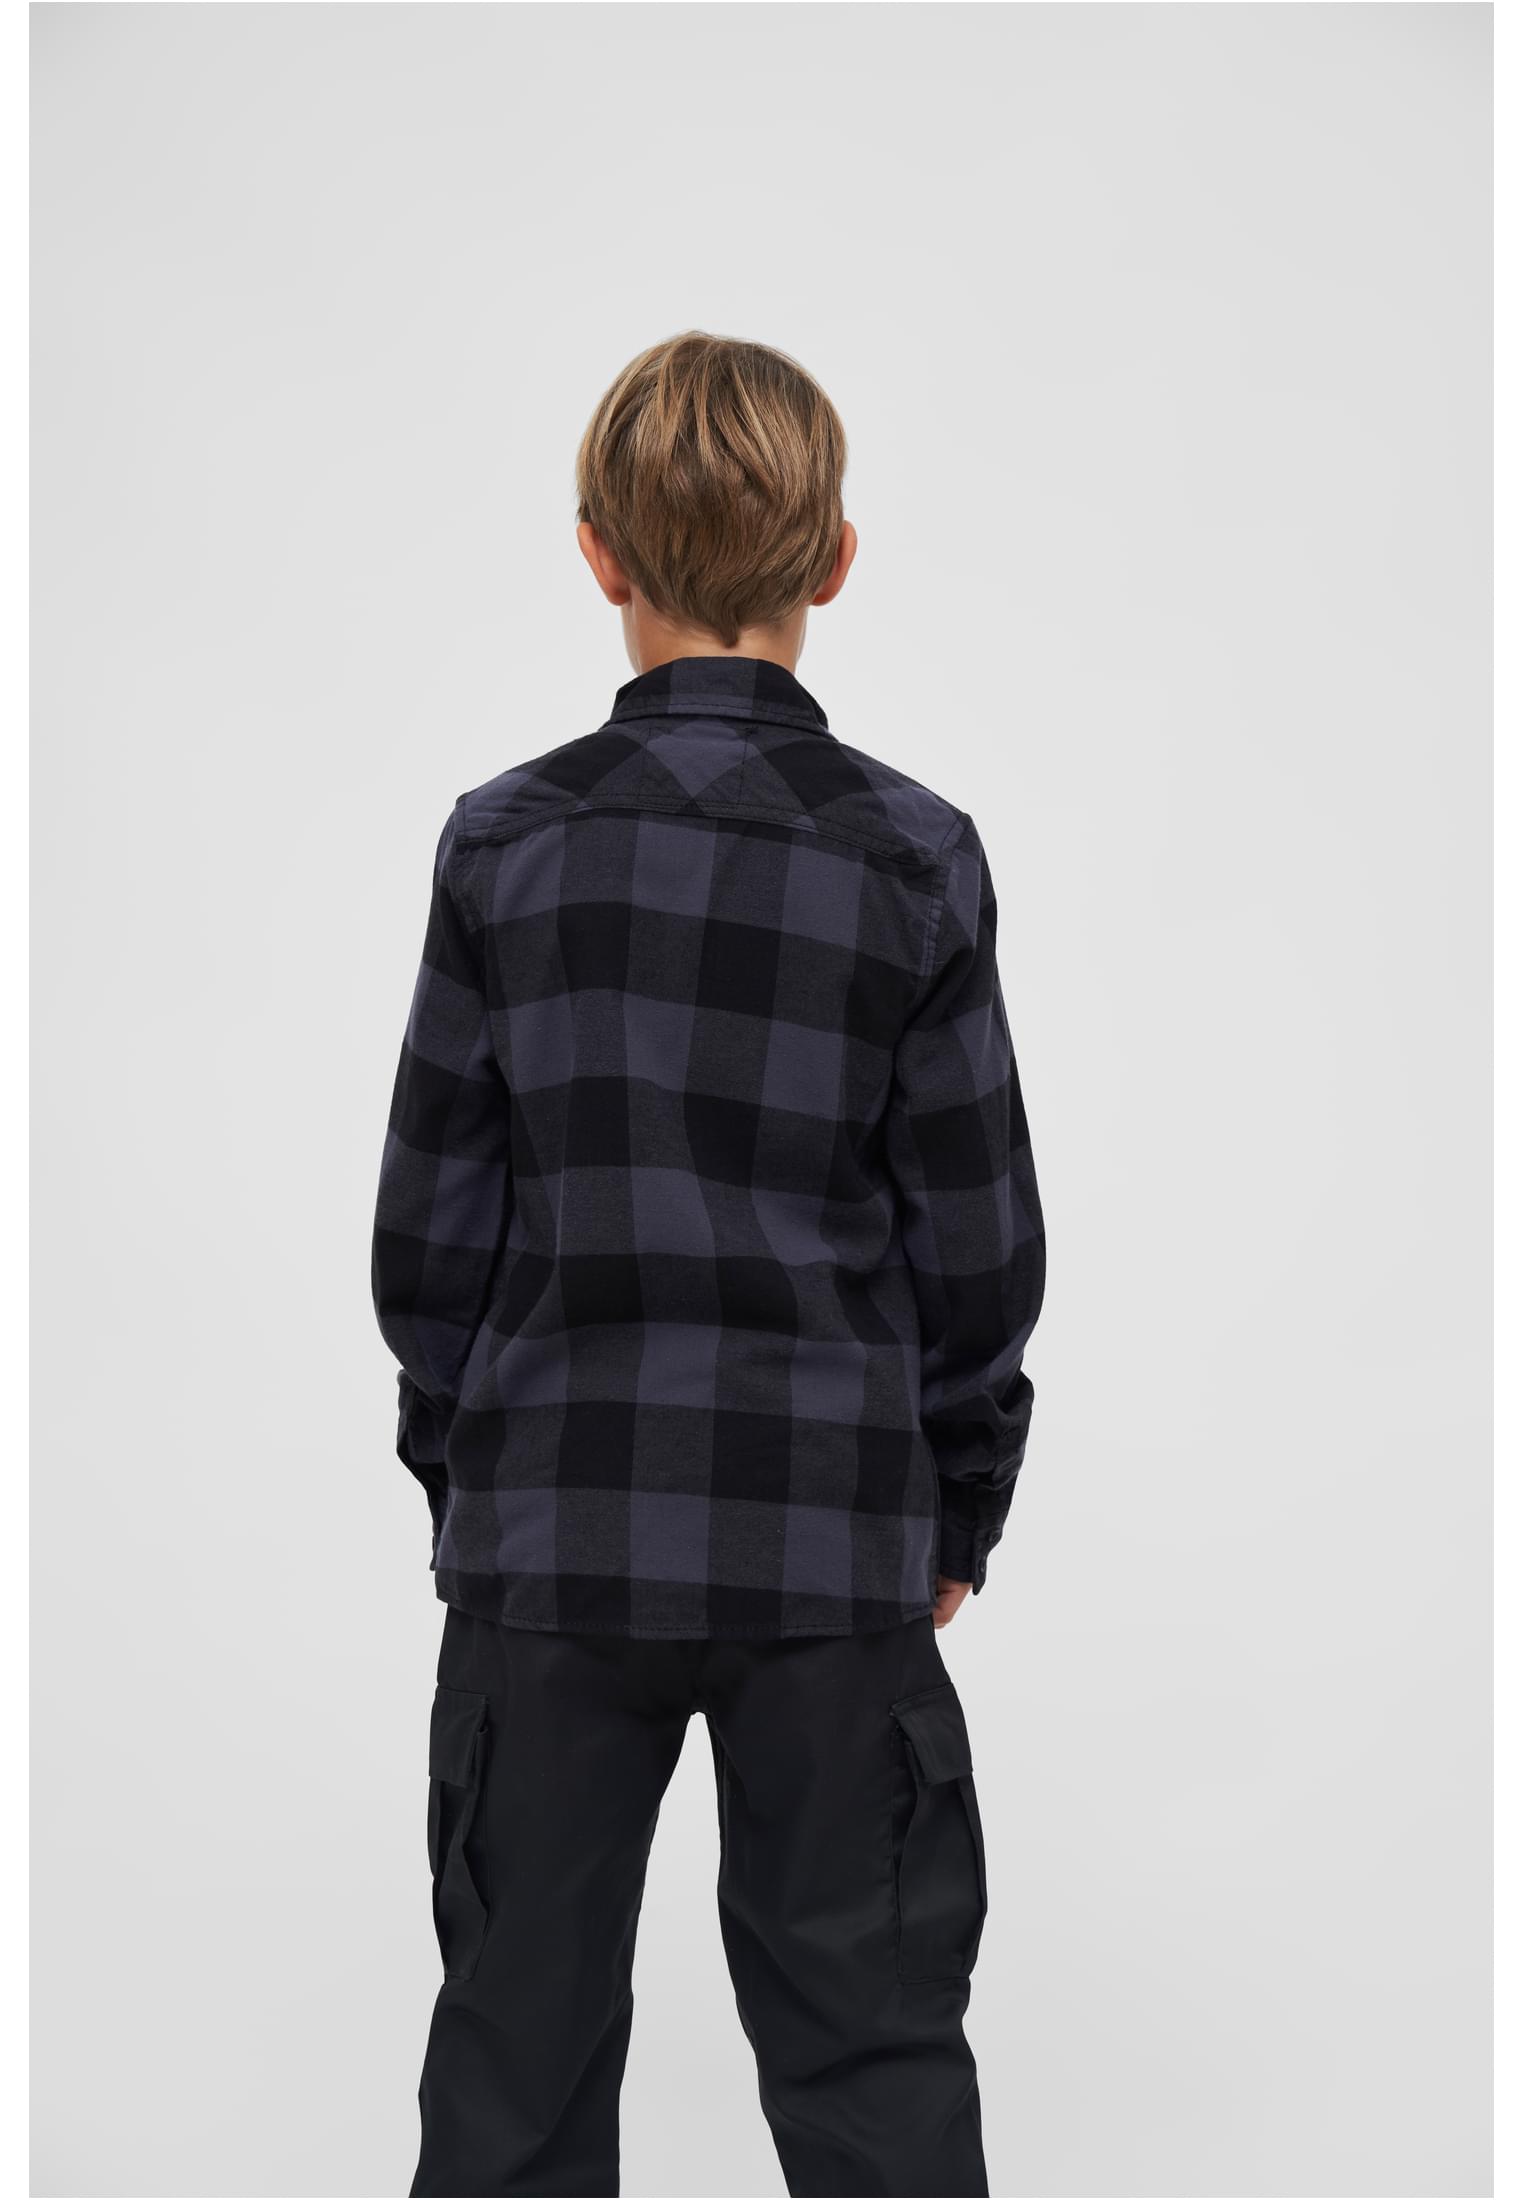 Kinder Checkshirt Kids in Farbe black/grey